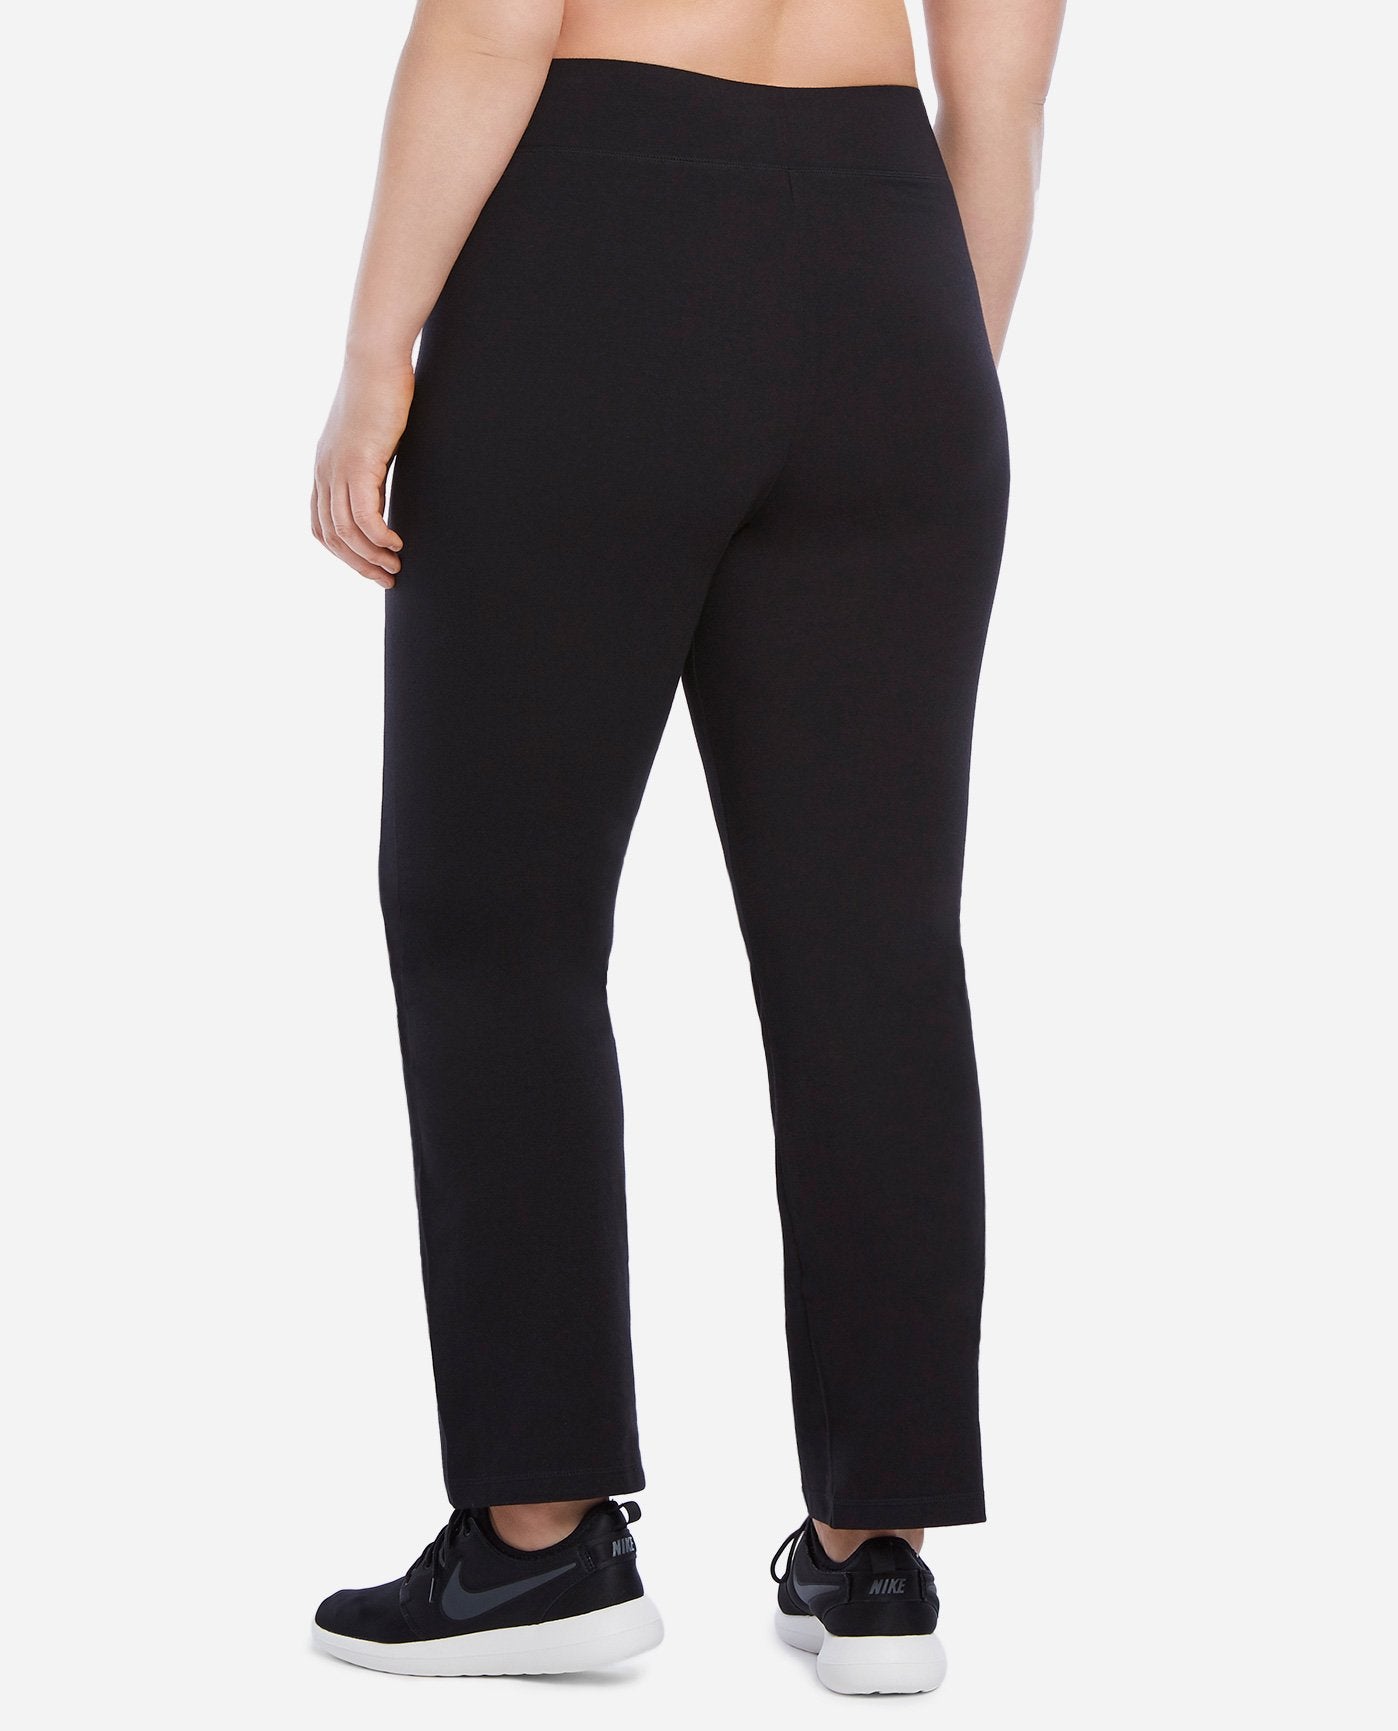 DANSKIN ladies yoga cycling pants / leggings SMALL (4-6) Fitted Dri More.Pocket  | eBay